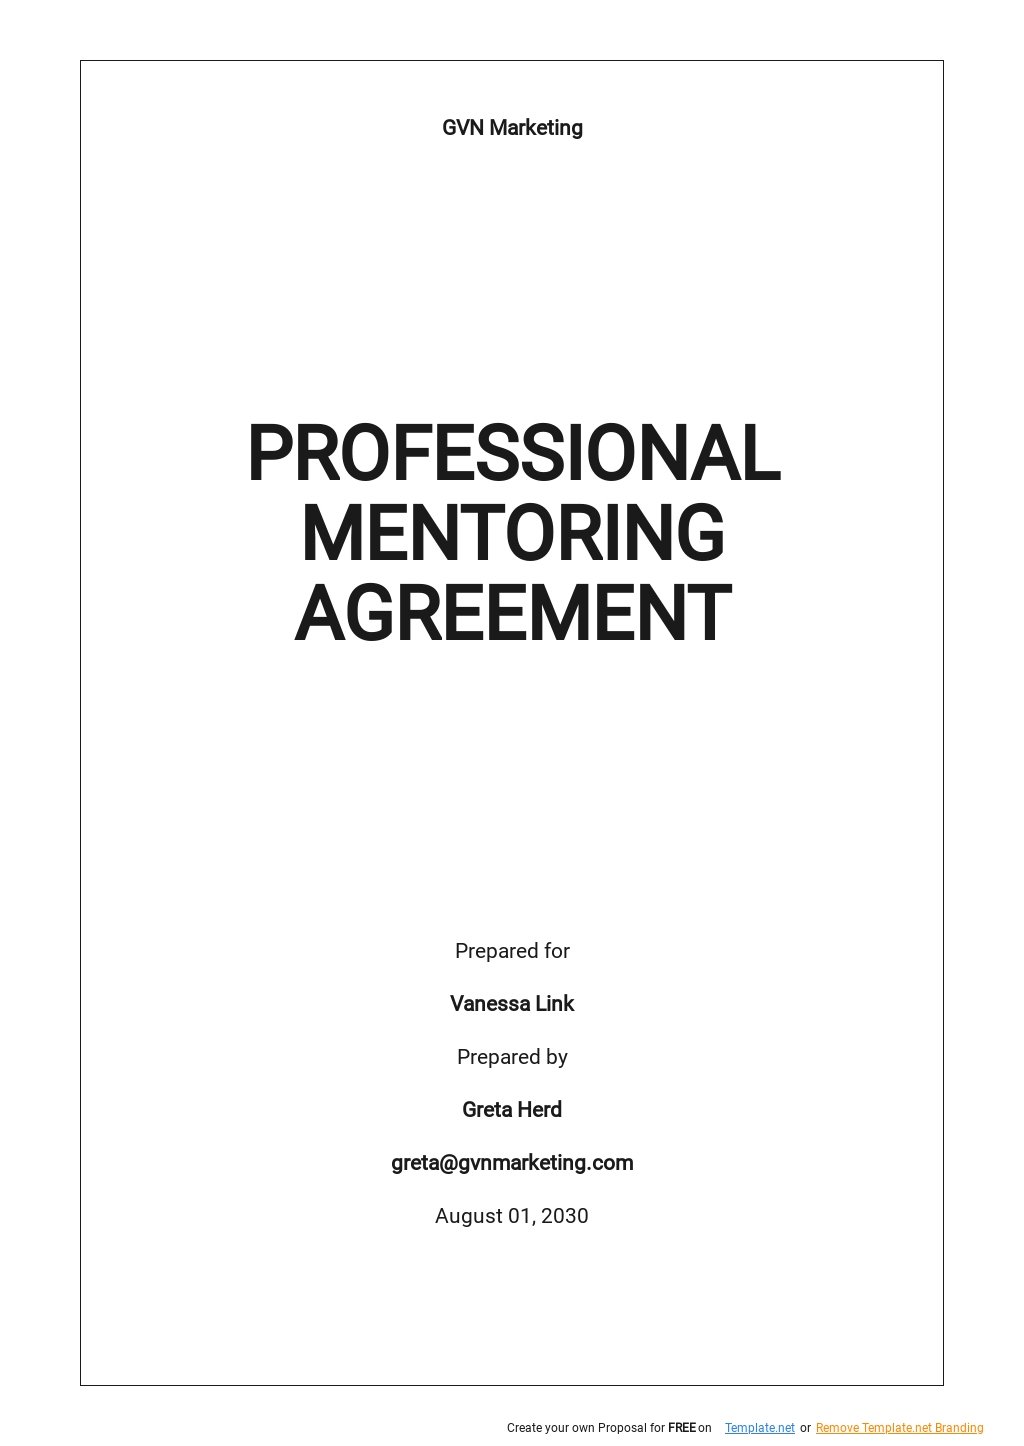 Mentoring Agreement Word Templates Design, Free, Download